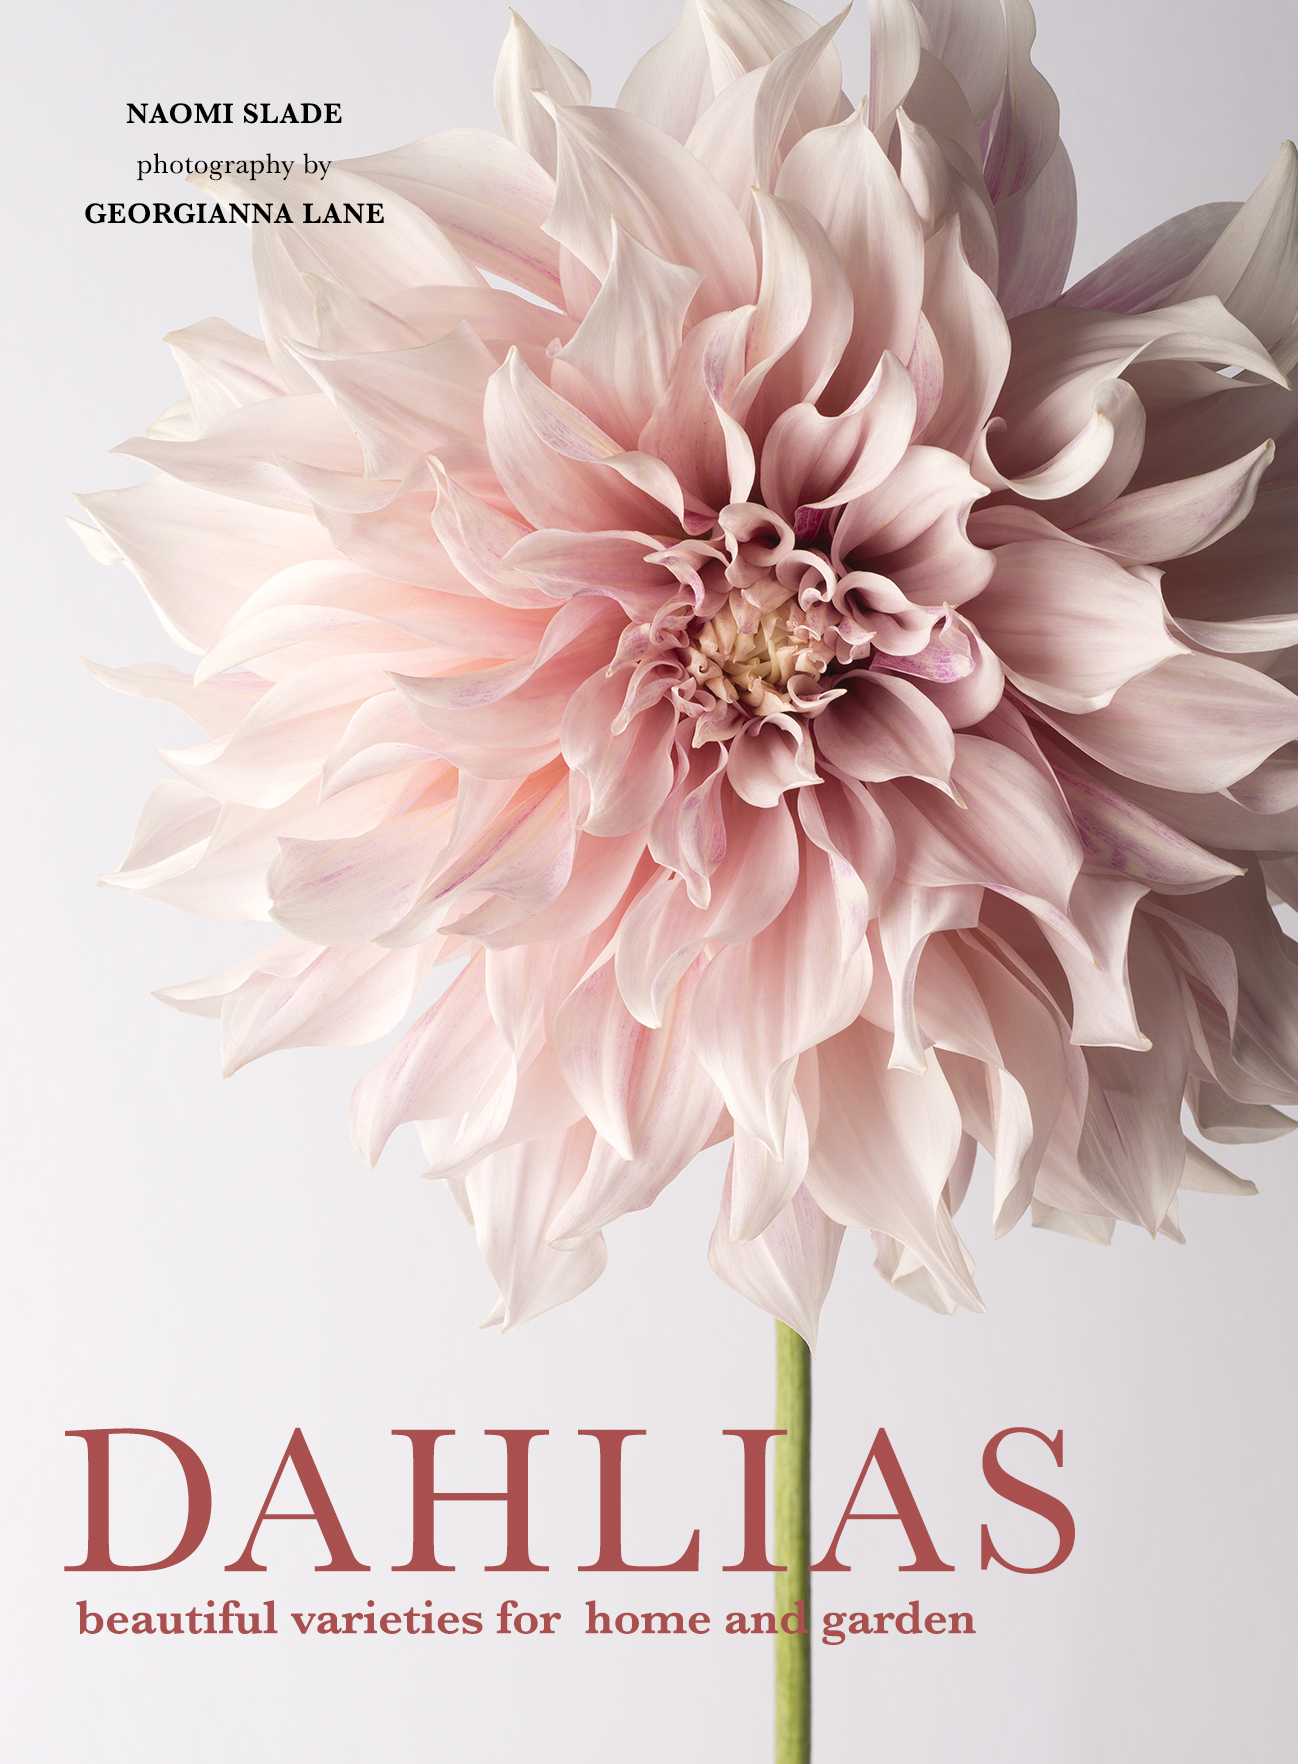 Dahlias, photography by Georgianna Lane